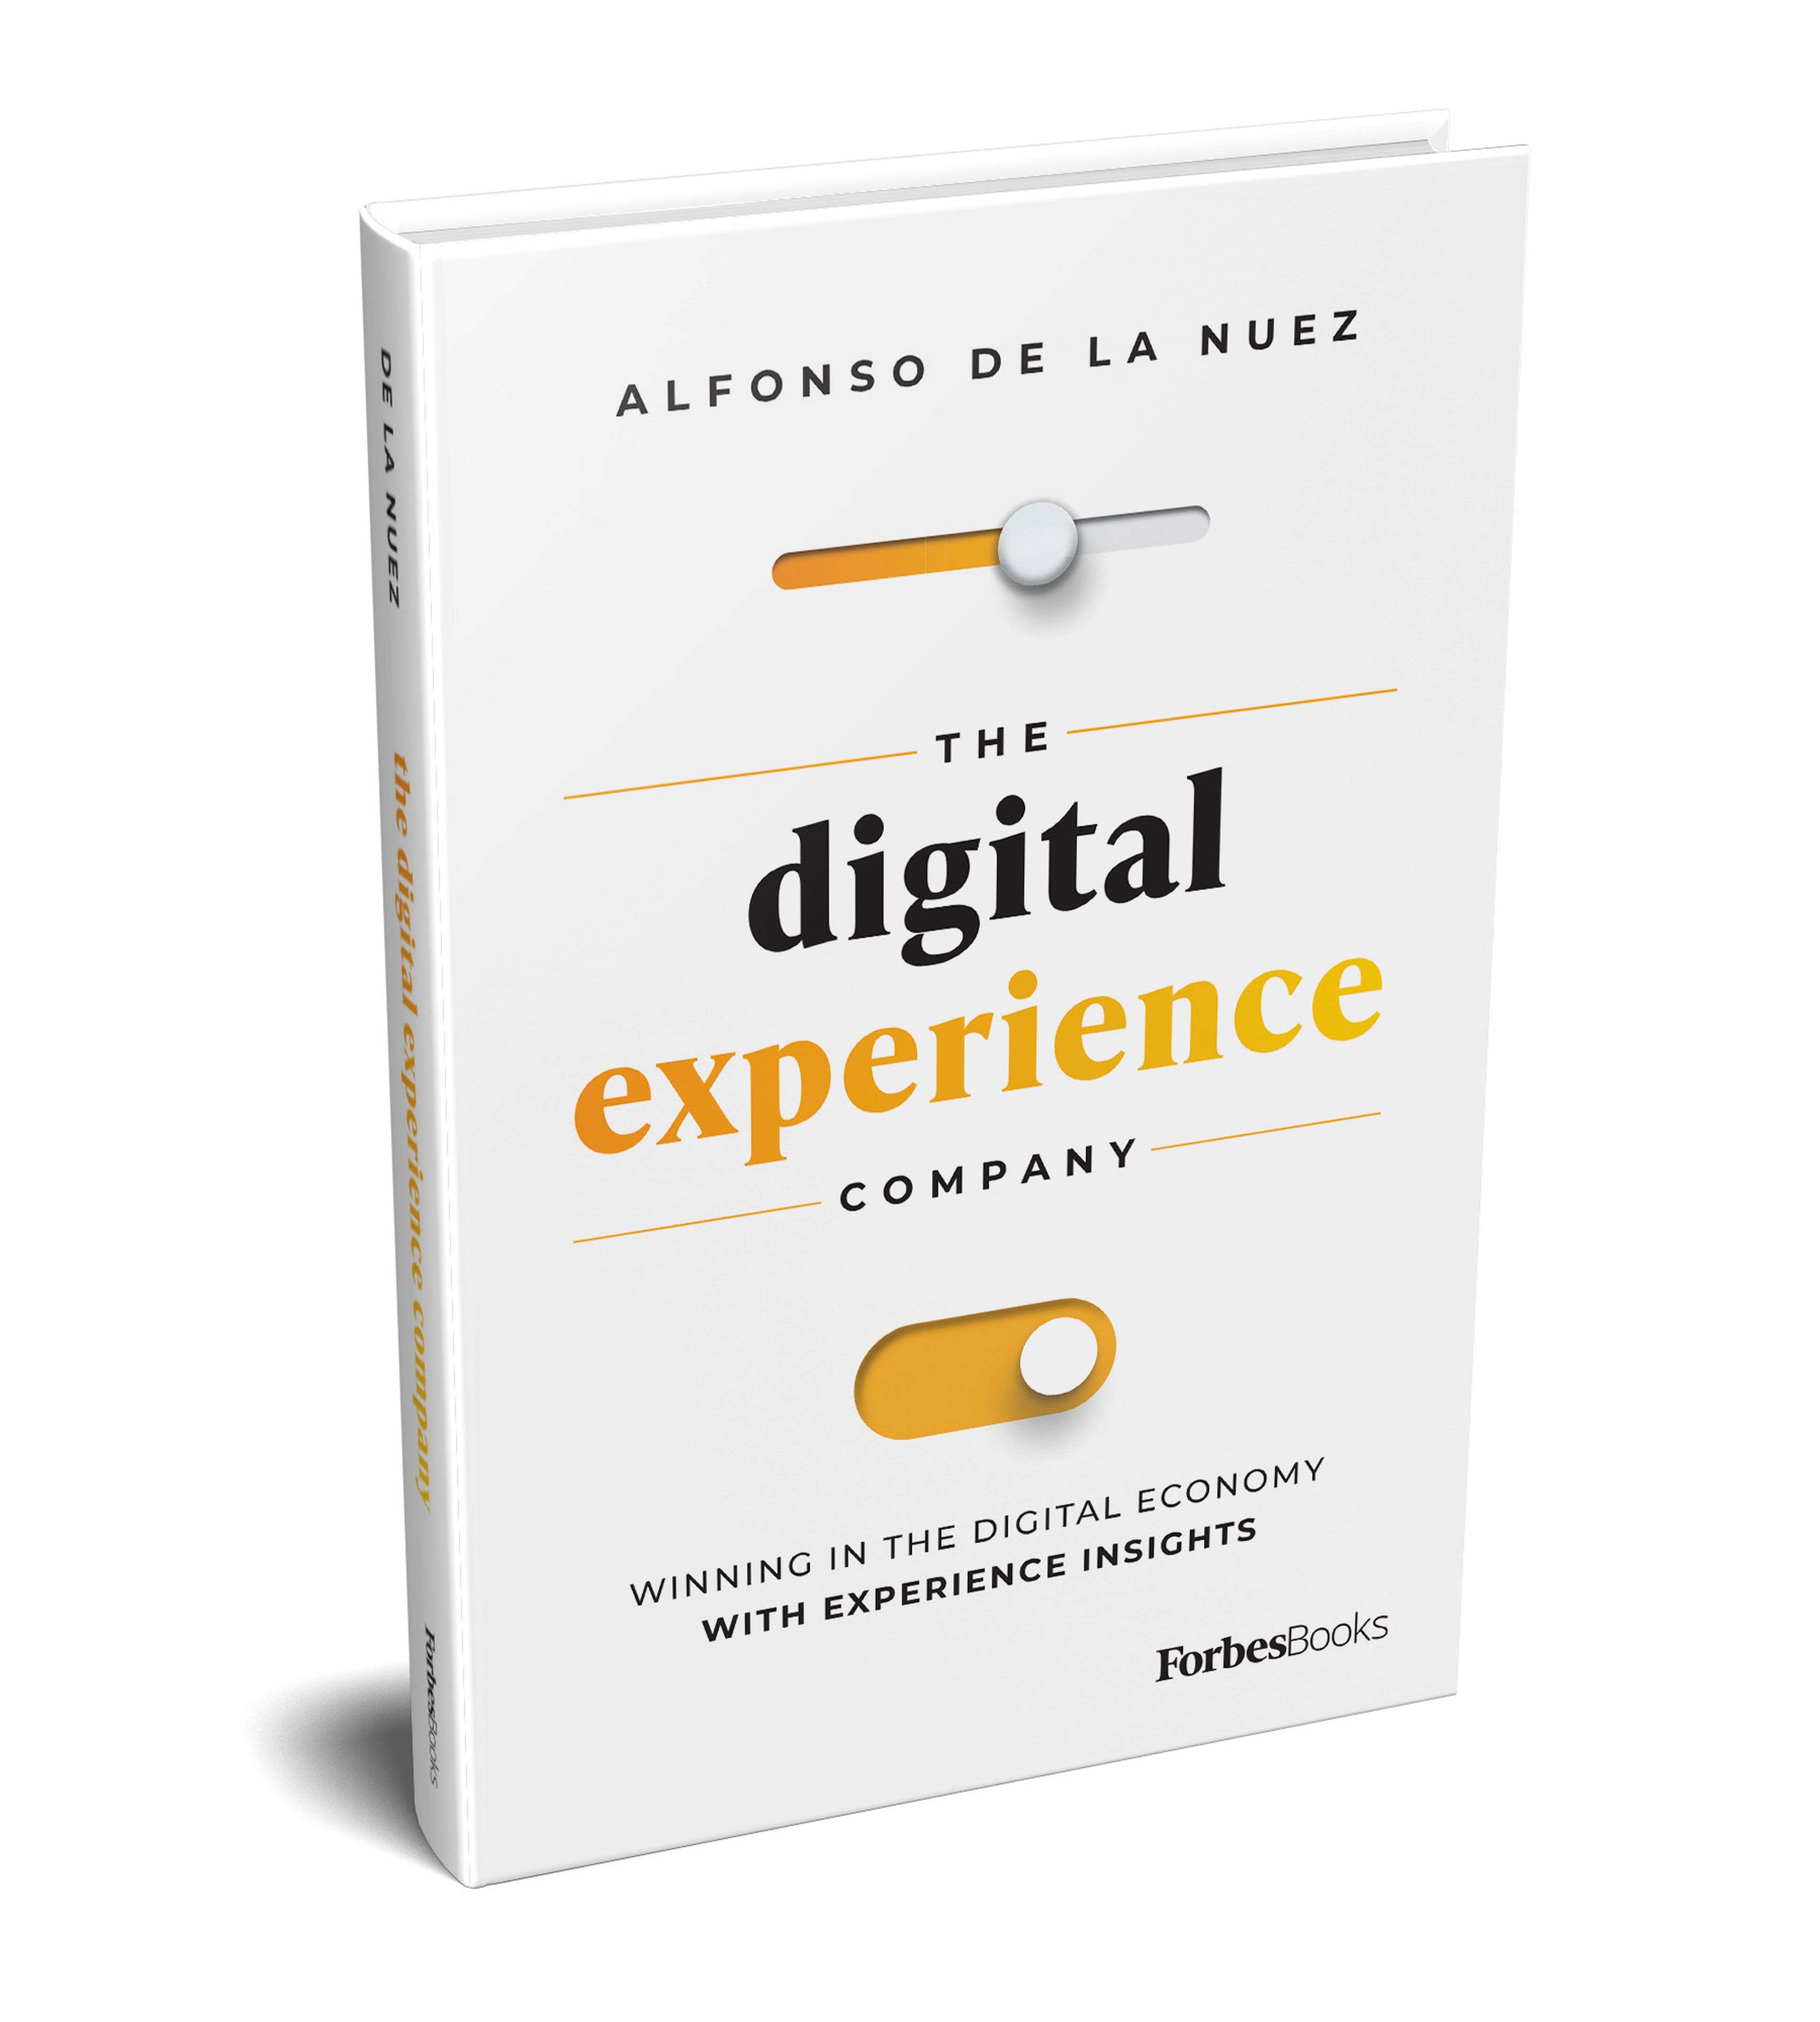 The Digital Experience Company